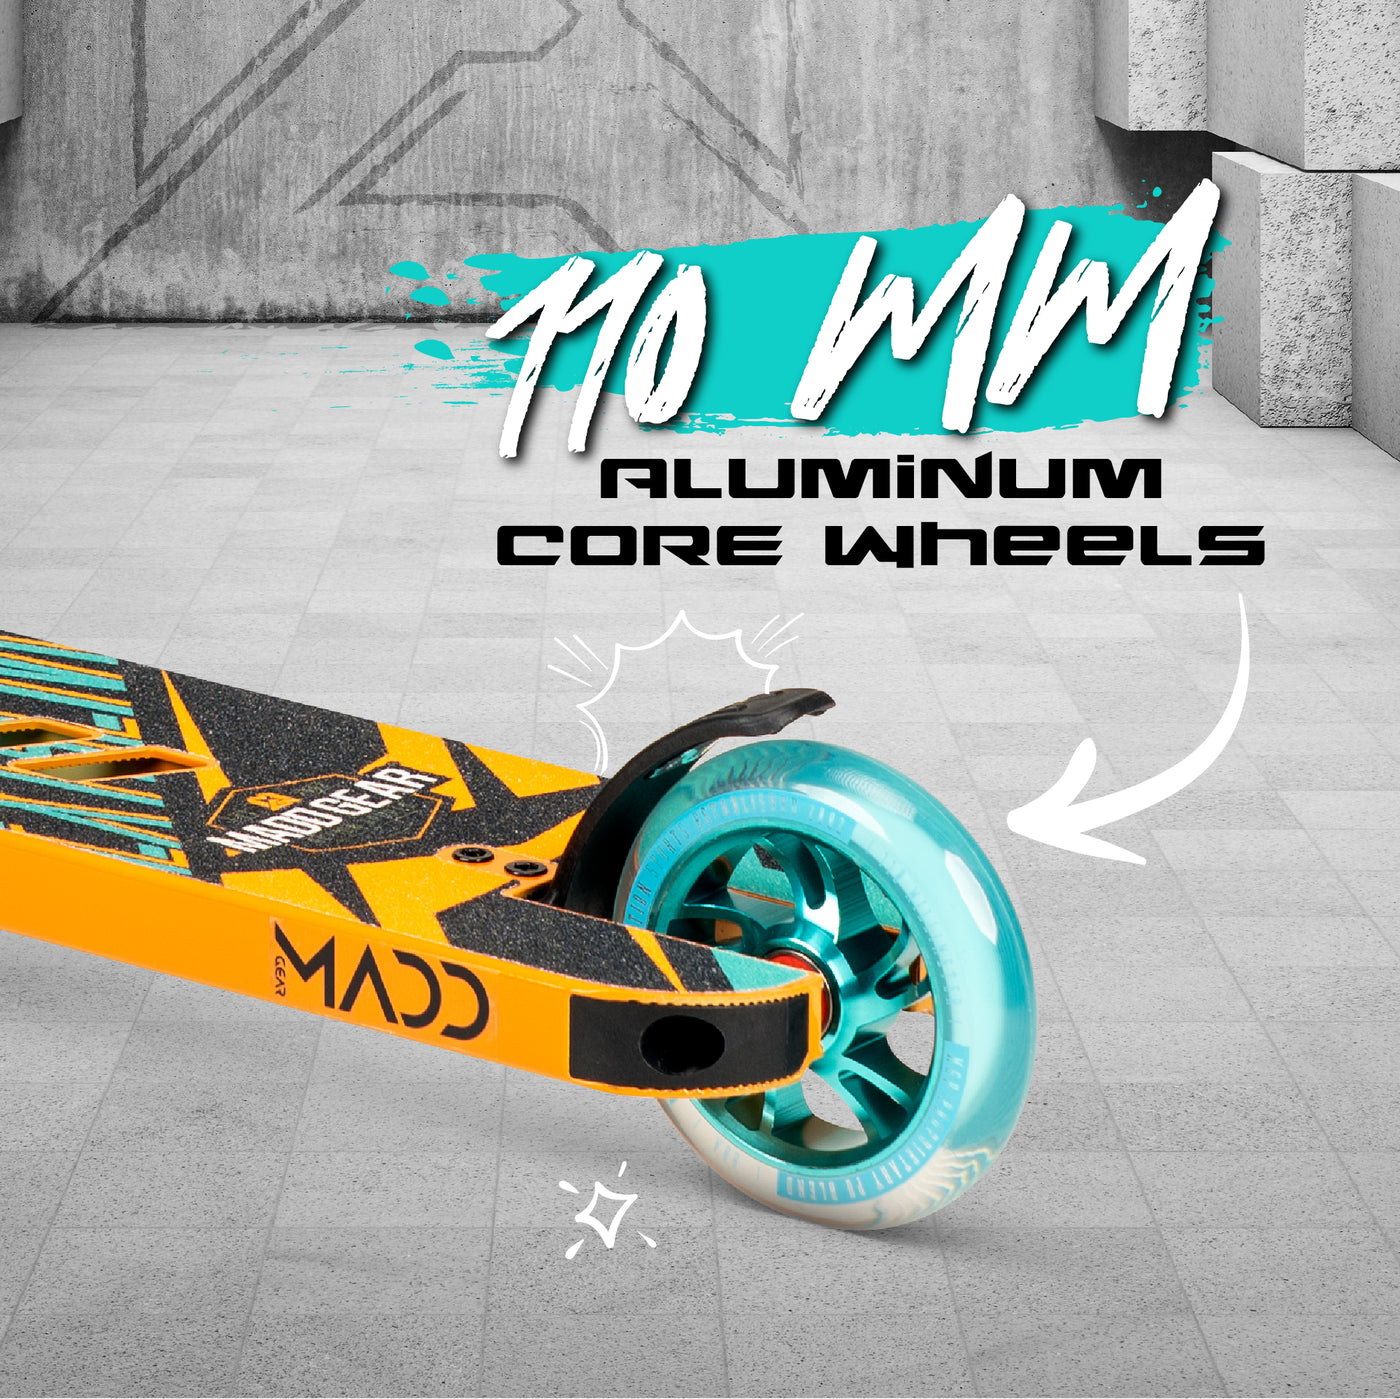 Madd Gear MGP Kick Extreme Stunt Scooter Complete High Quality Razor Pro Trick Skate Park Mad Teal Orange Wheels